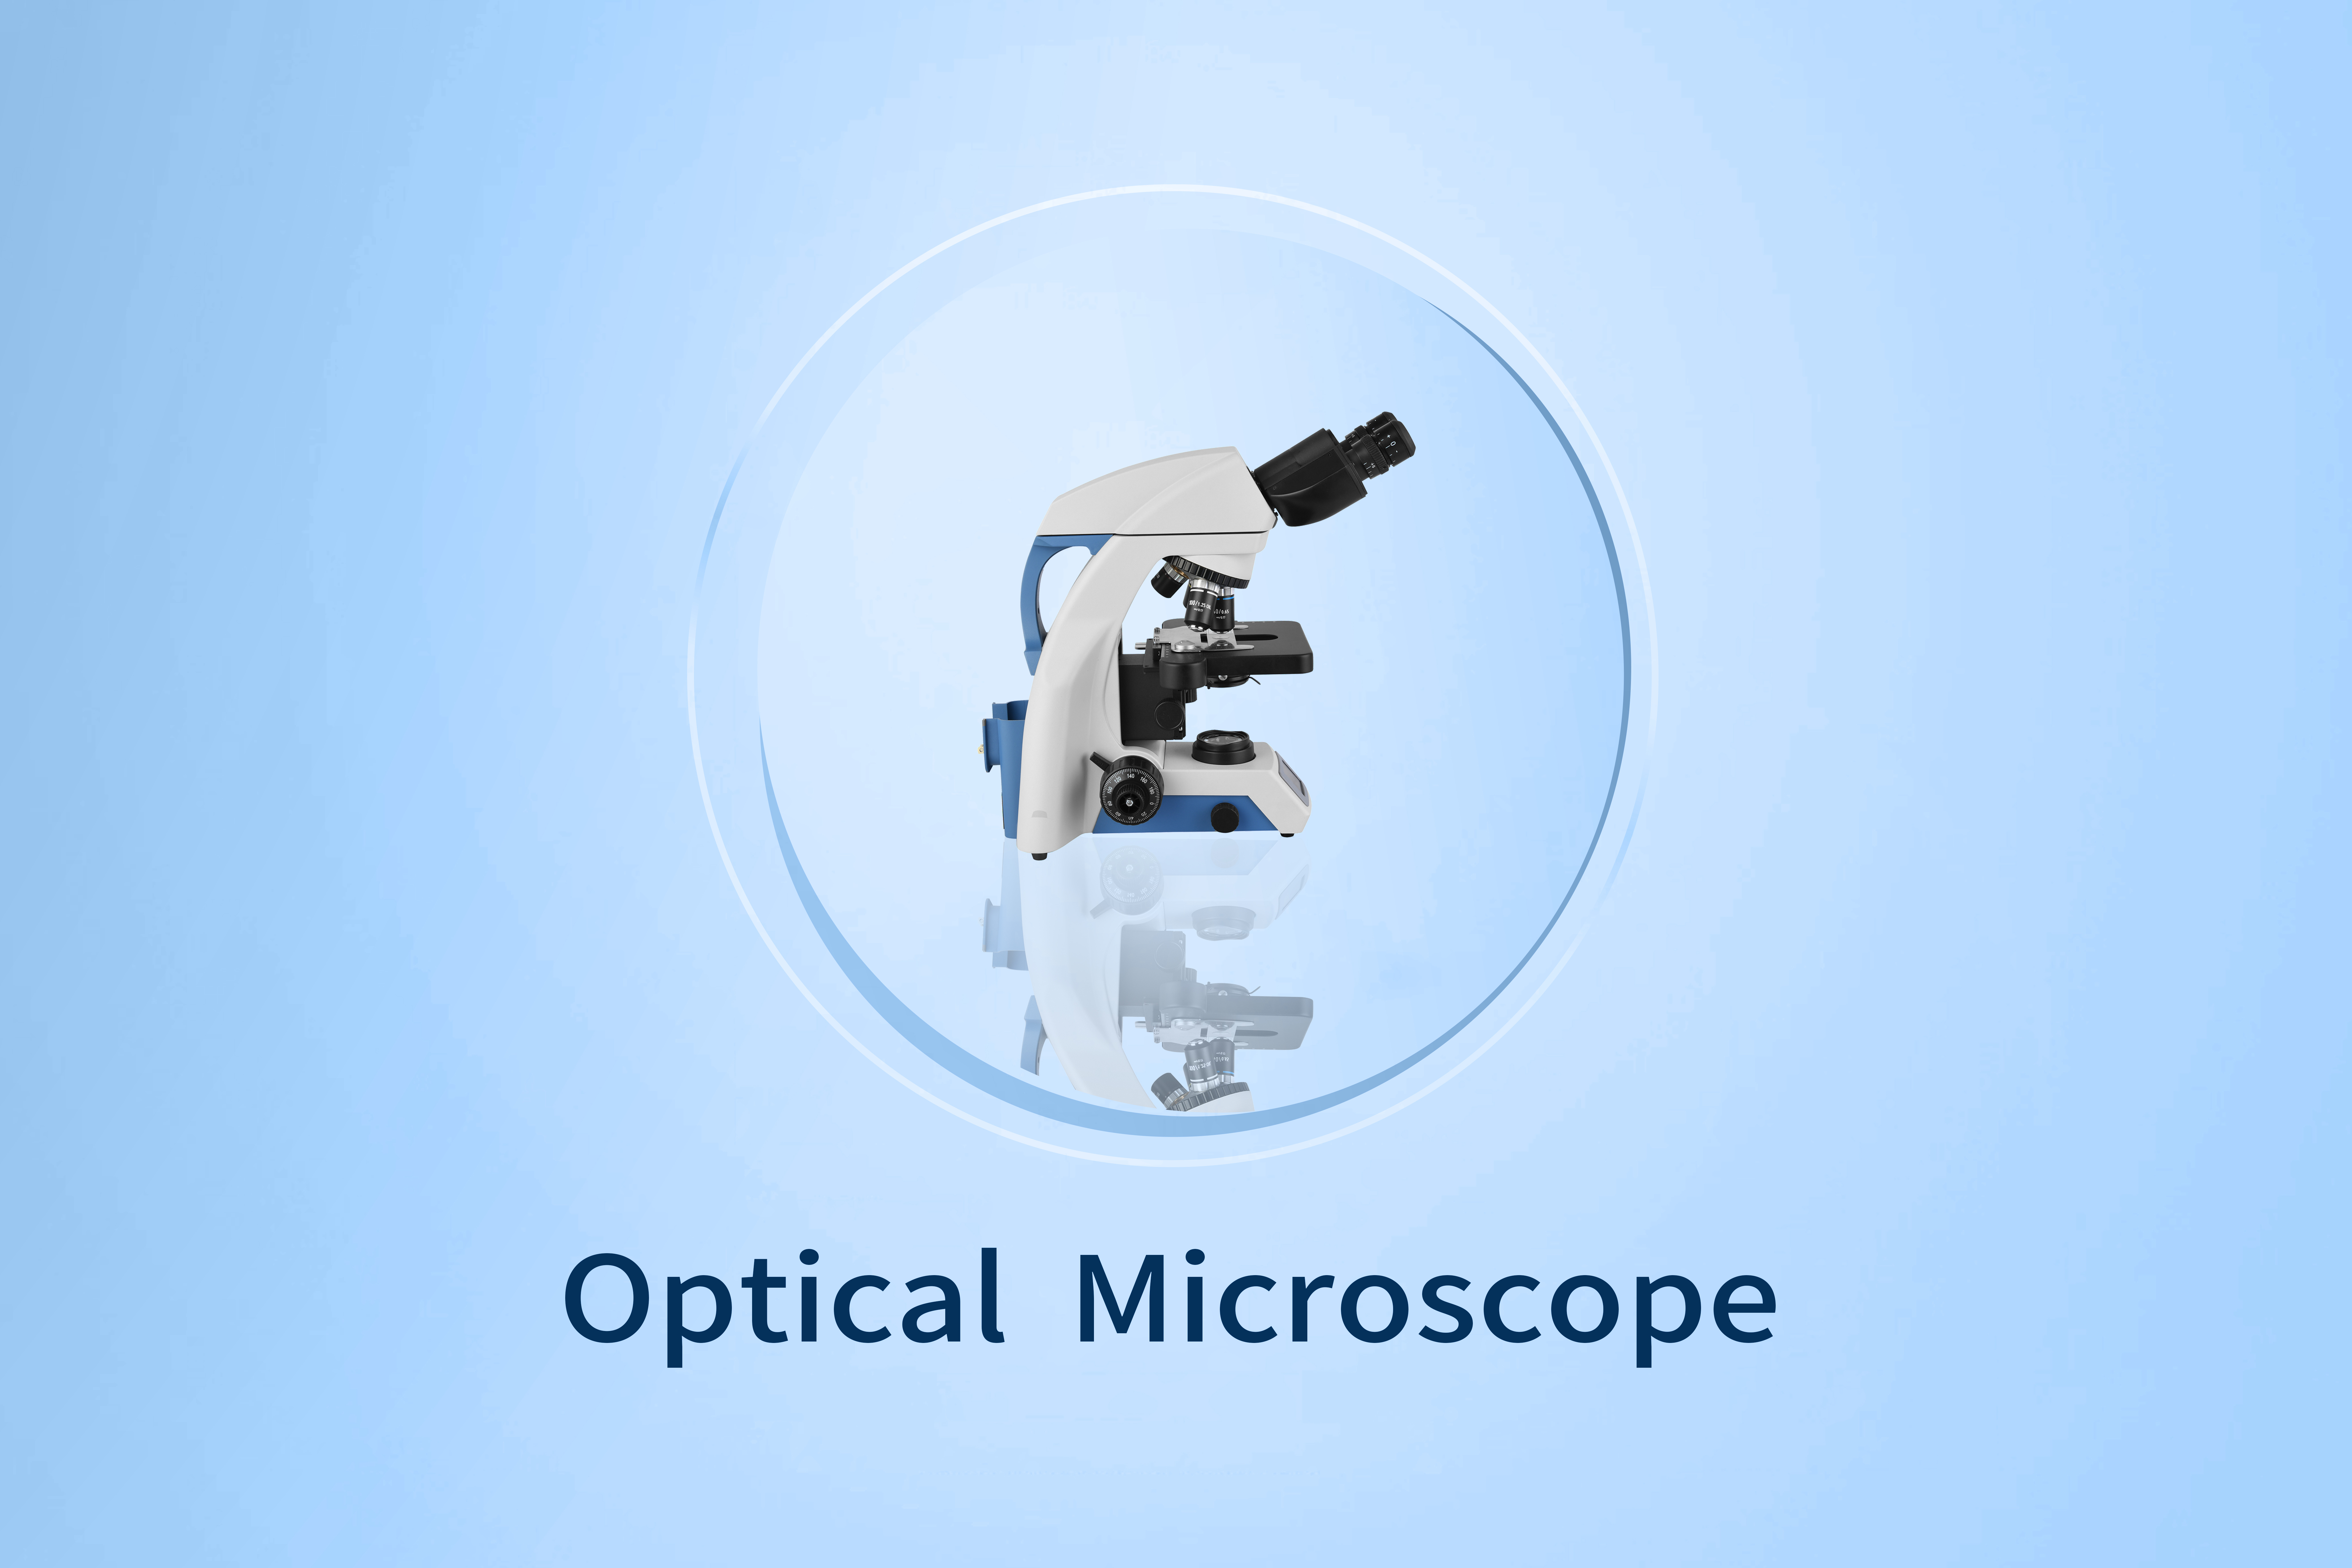 How Many Types of Optical Microscopes?